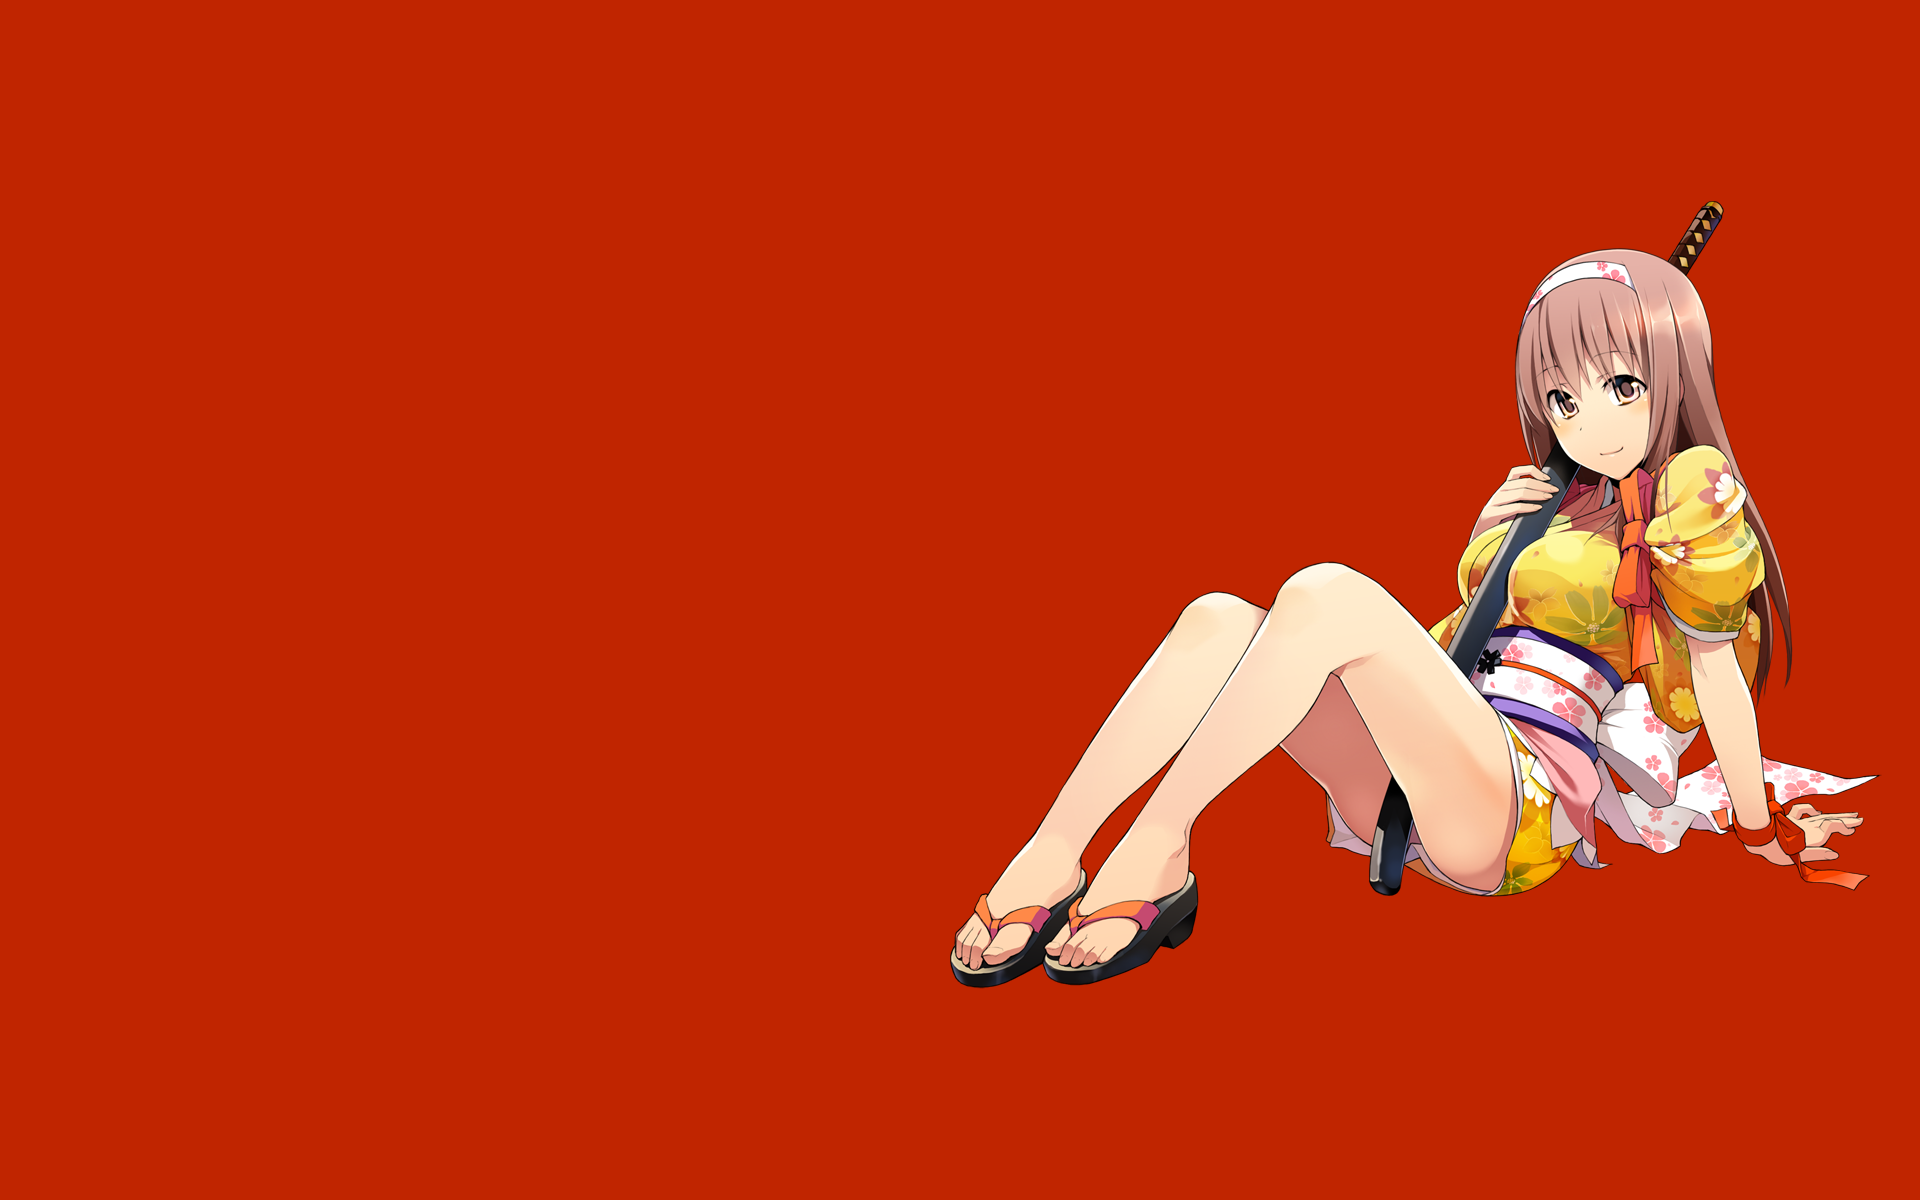 Anime 1920x1200 anime anime girls Onigiri thighs legs simple background red background katana sword weapon women with swords yellow dress dress long hair